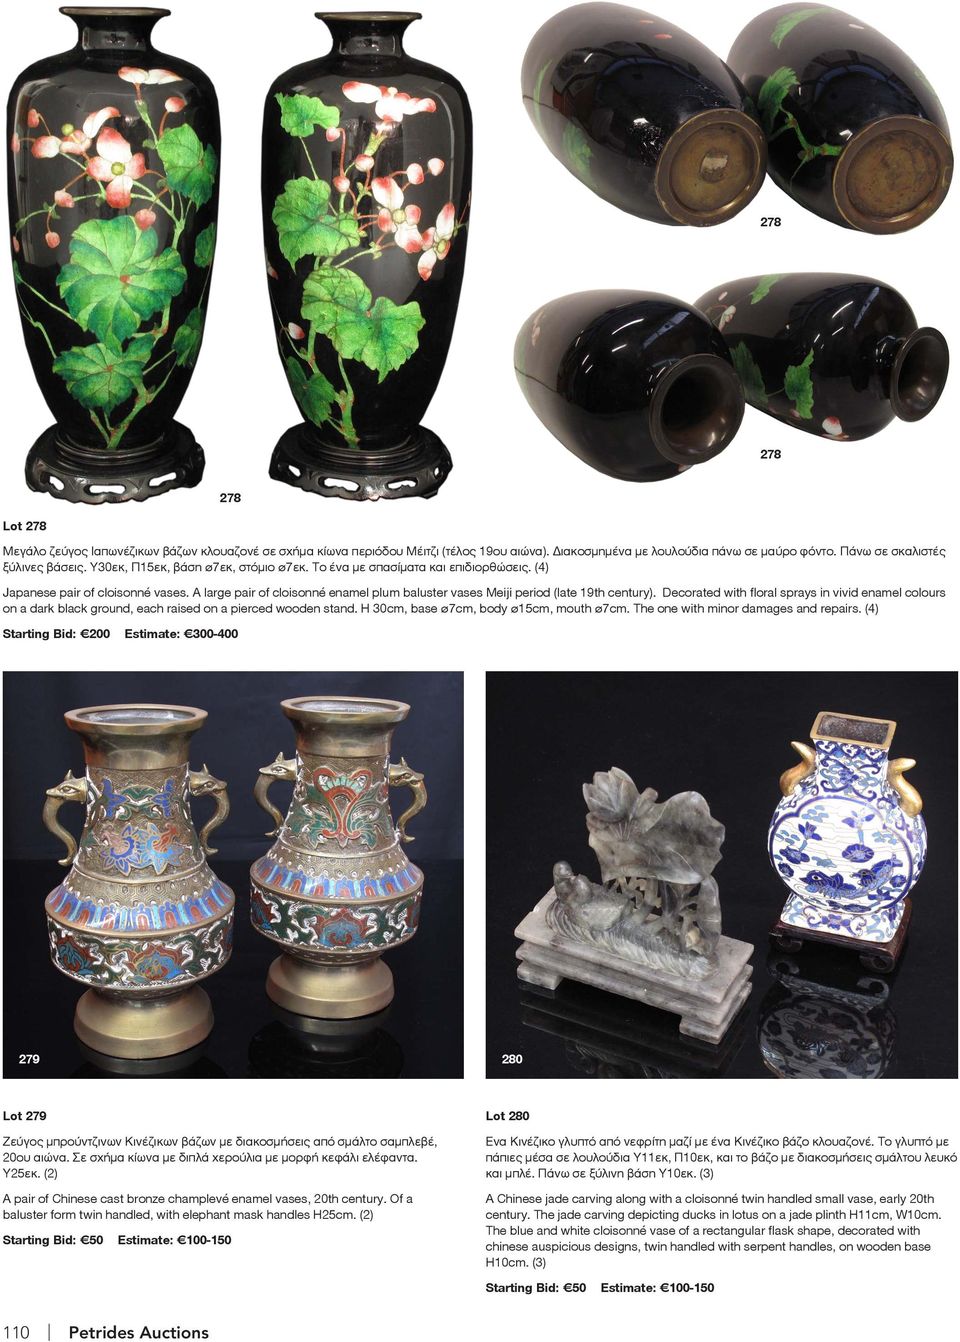 A large pair of cloisonné enamel plum baluster vases Meiji period (late 19th century).